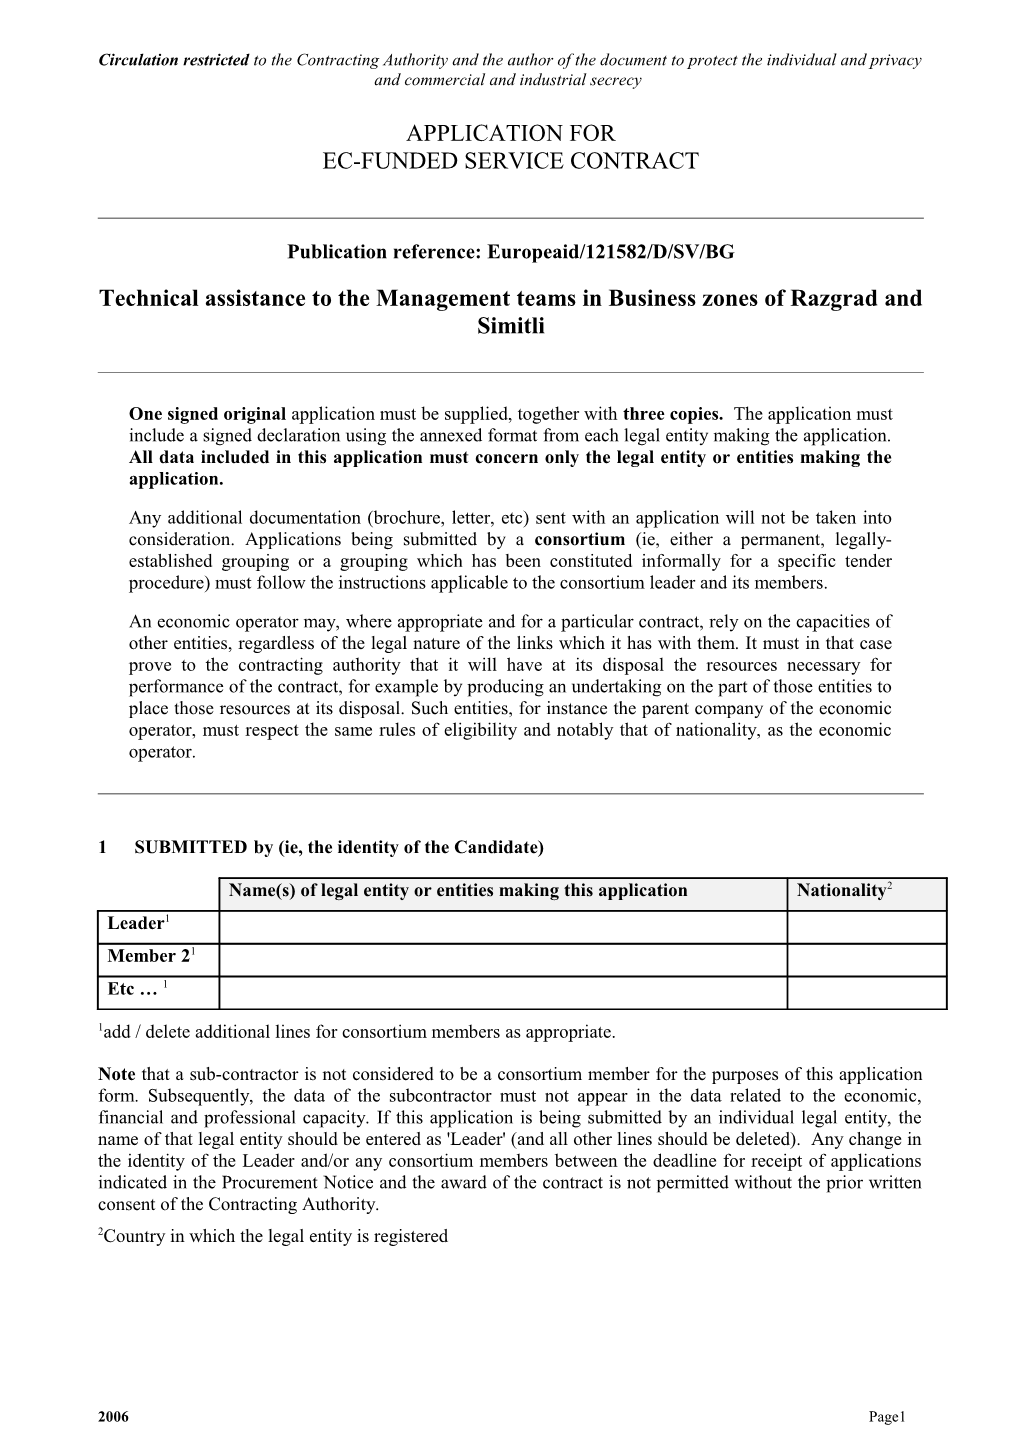 Publication Reference: Europeaid/121582/D/SV/BG